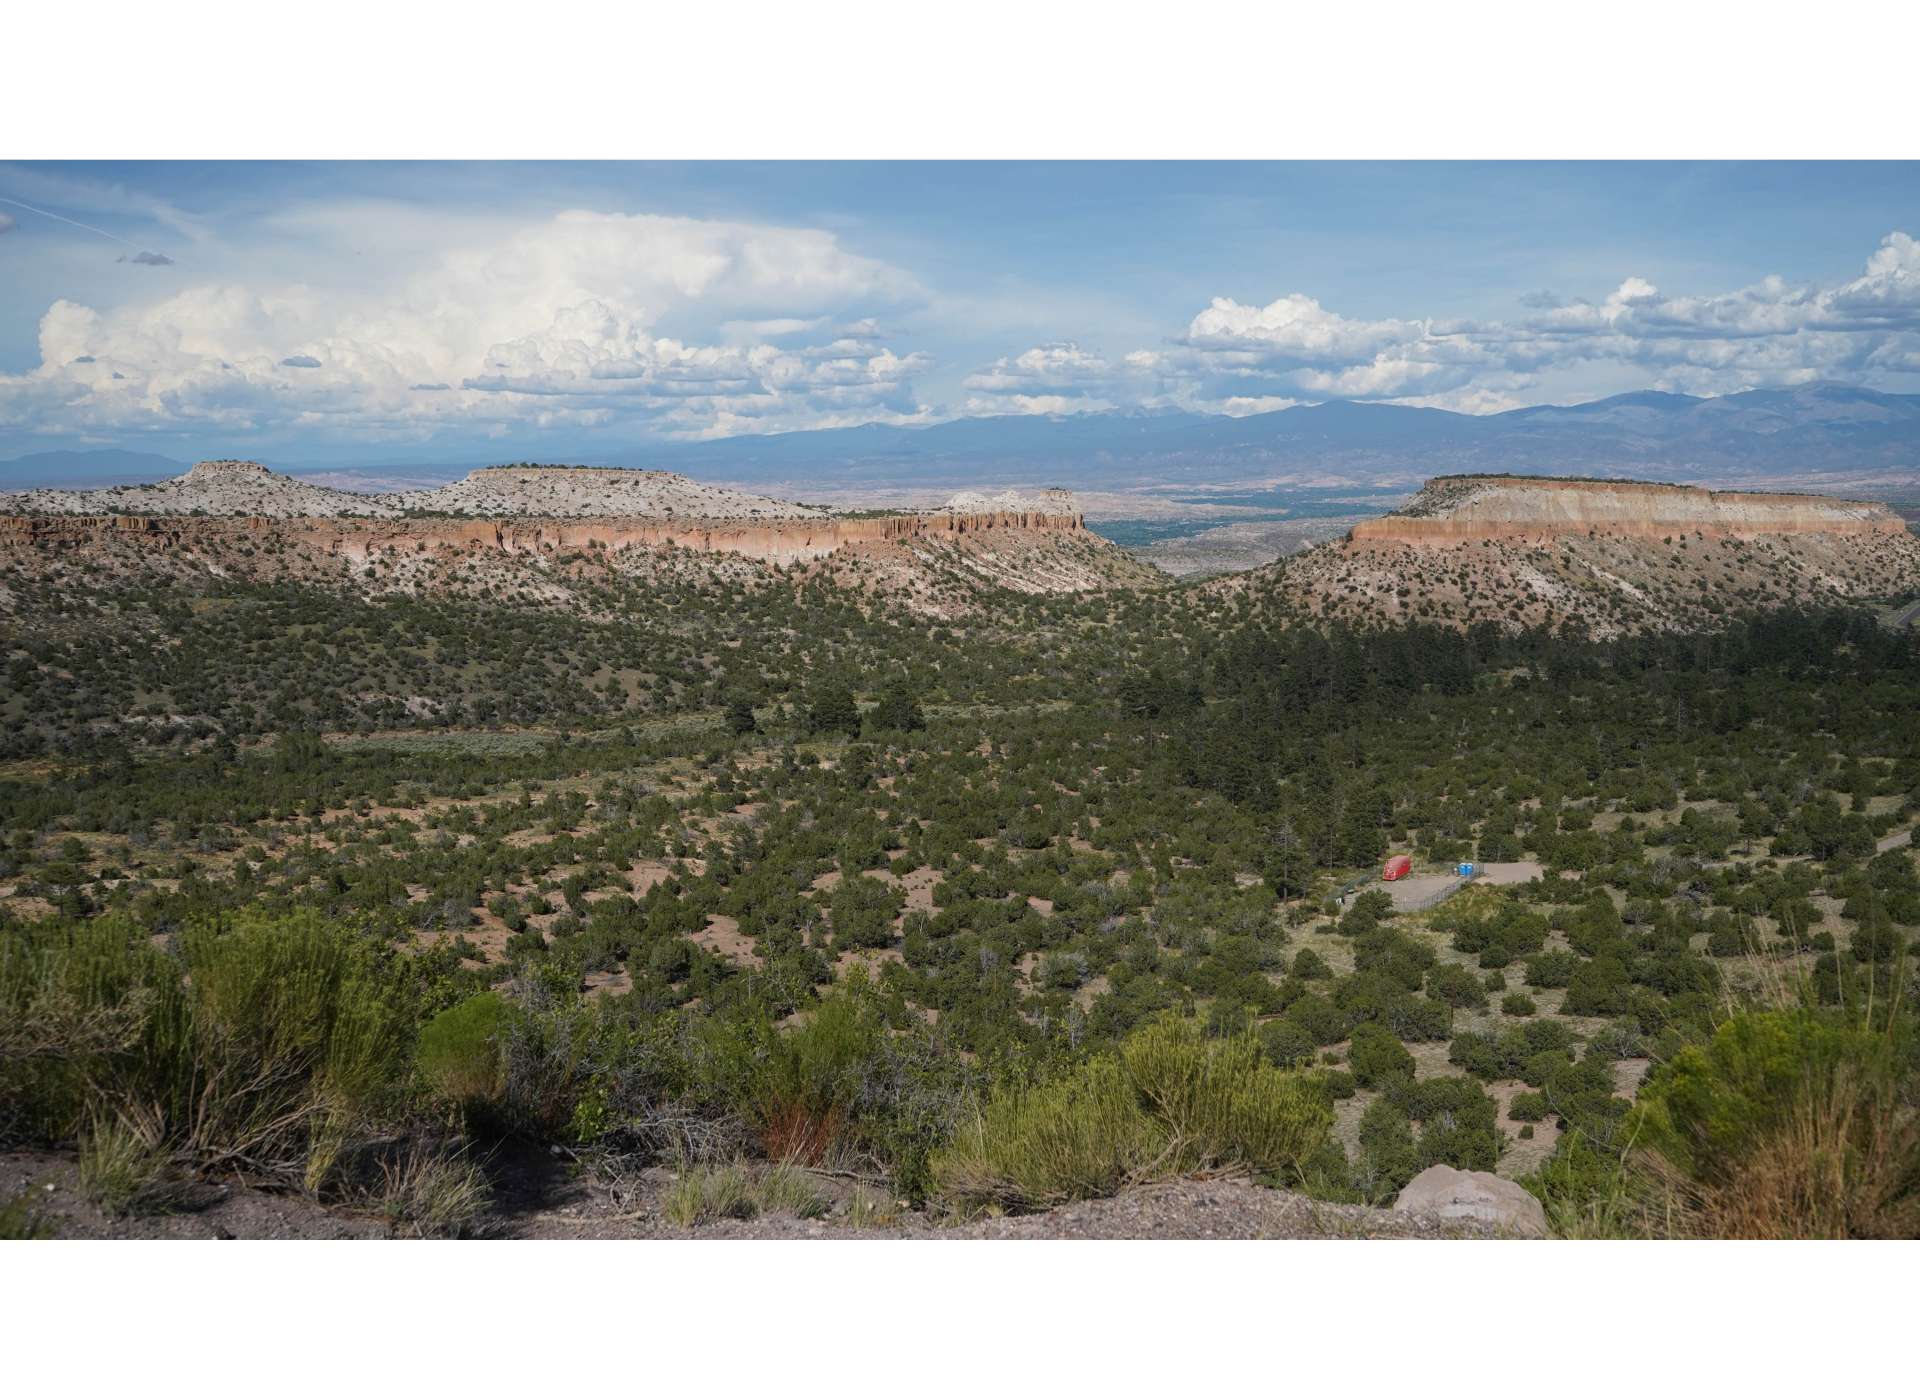  The beautiful natural landscape around Los Alamos.